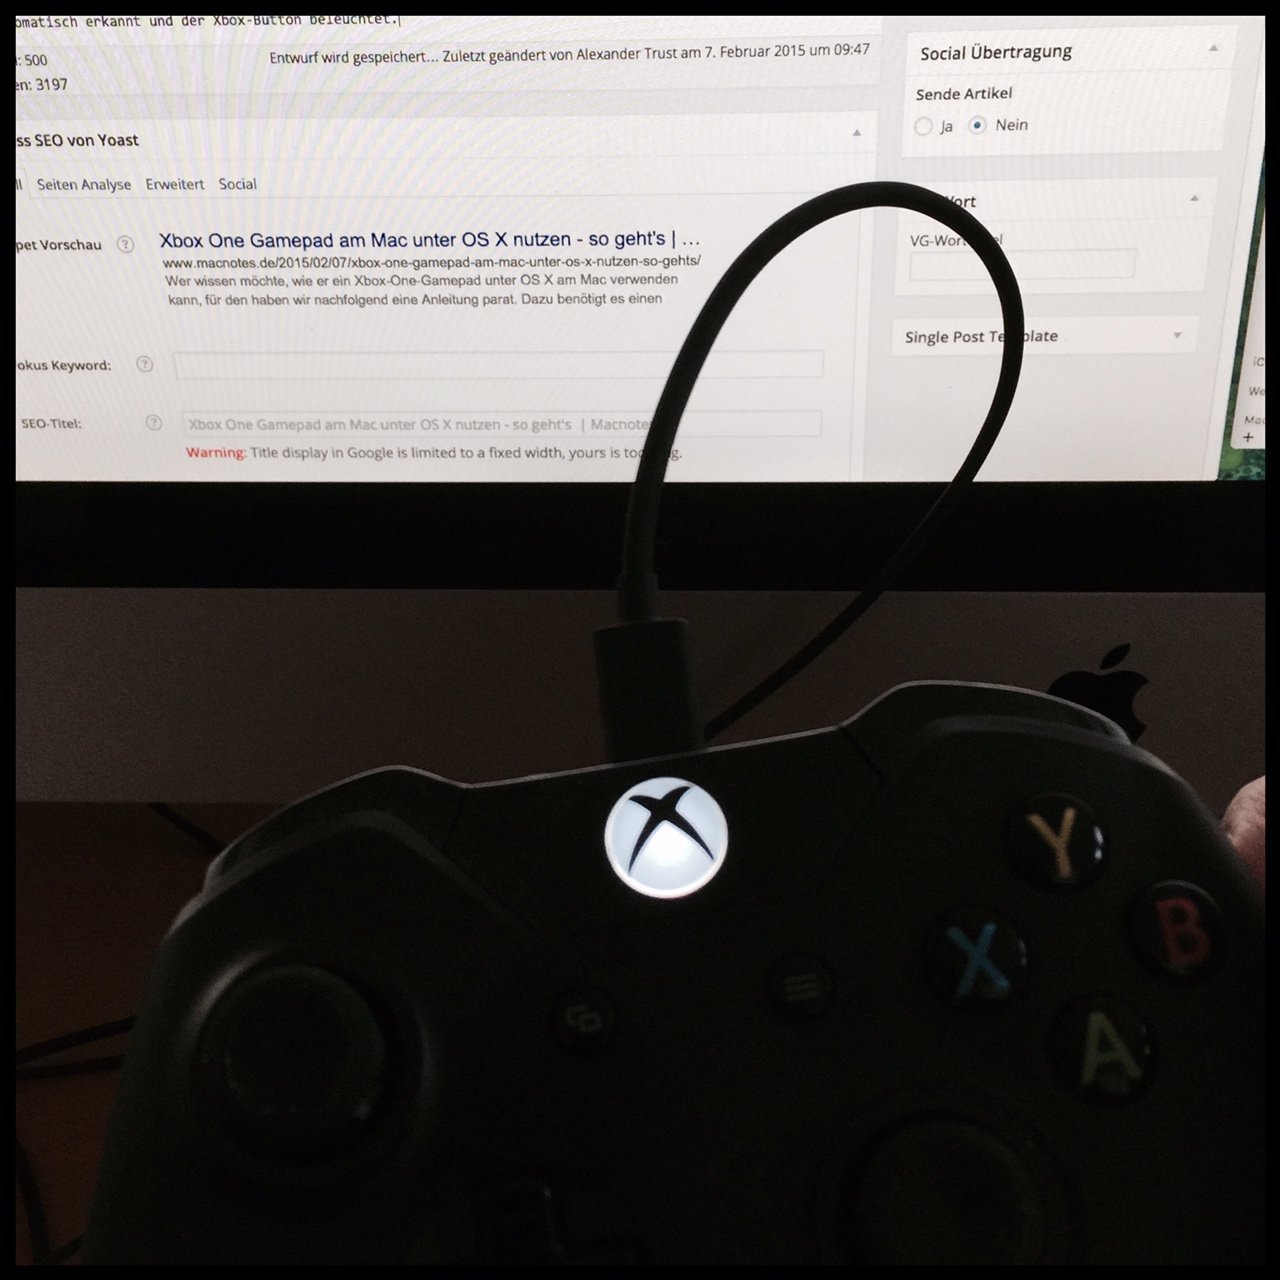 Xbox One Gamepad am Mac unter OS X